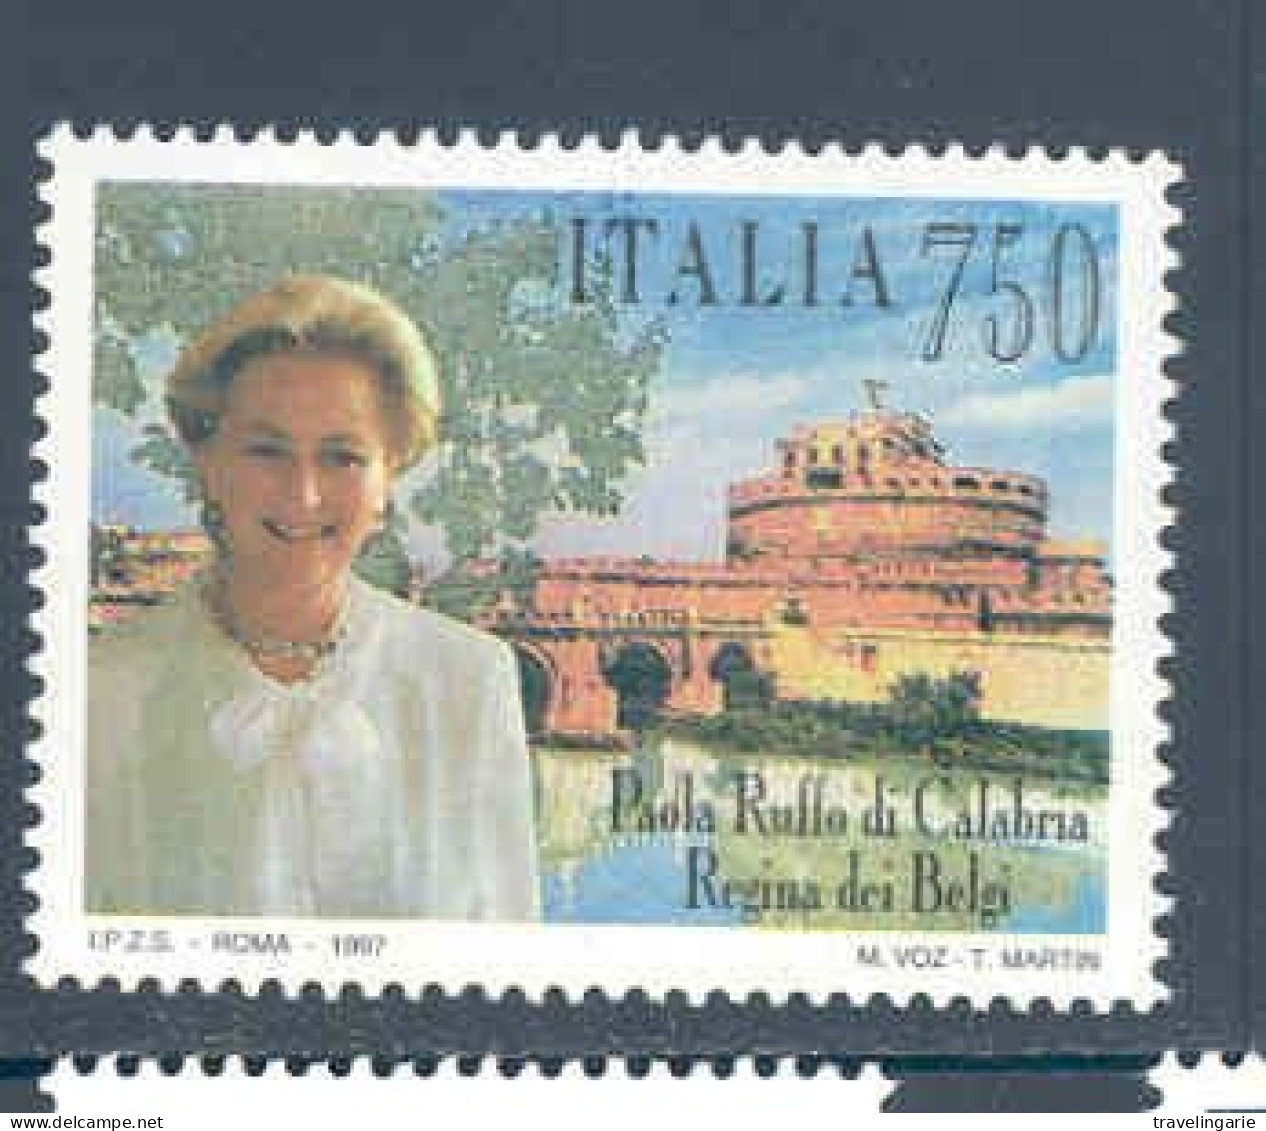 ITALY 1997 Queen Paola Of Belgium MNH ** - Royalties, Royals